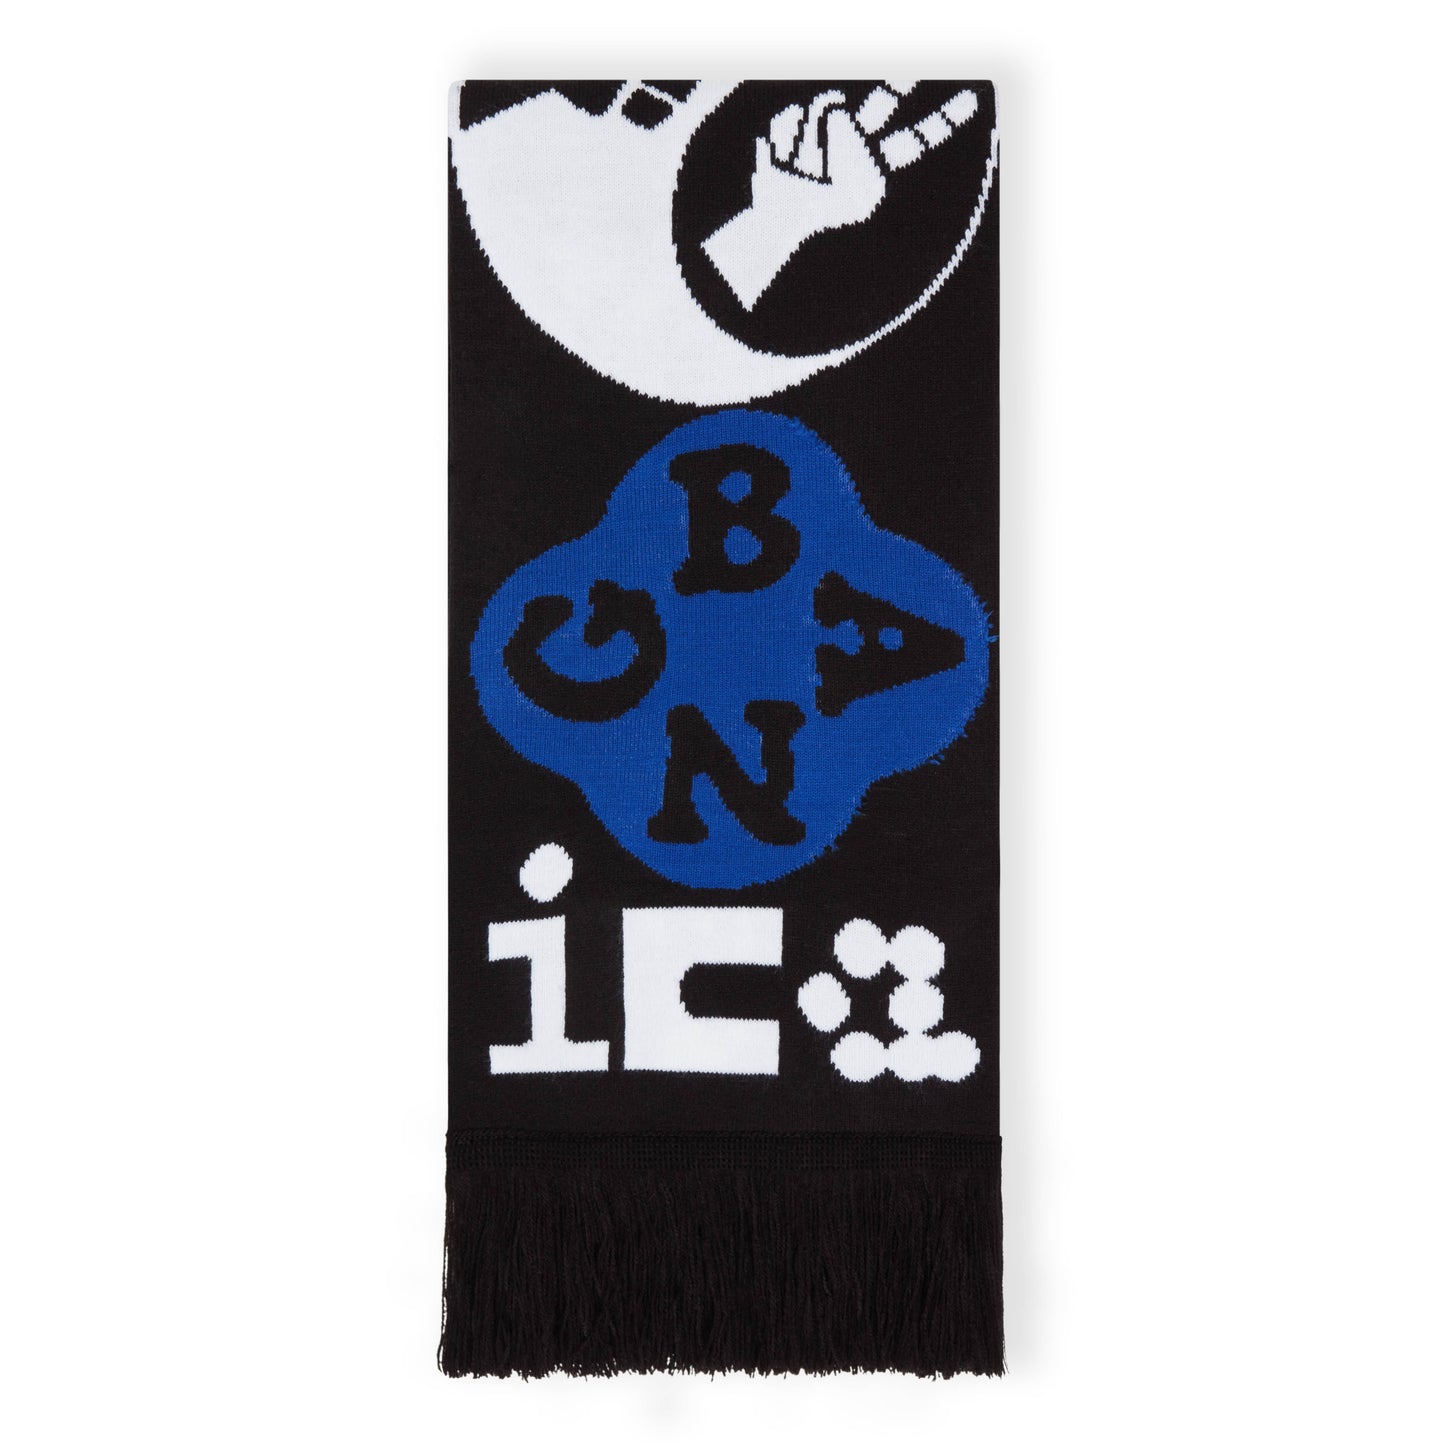 SPORTS BANGER x ICA scarf